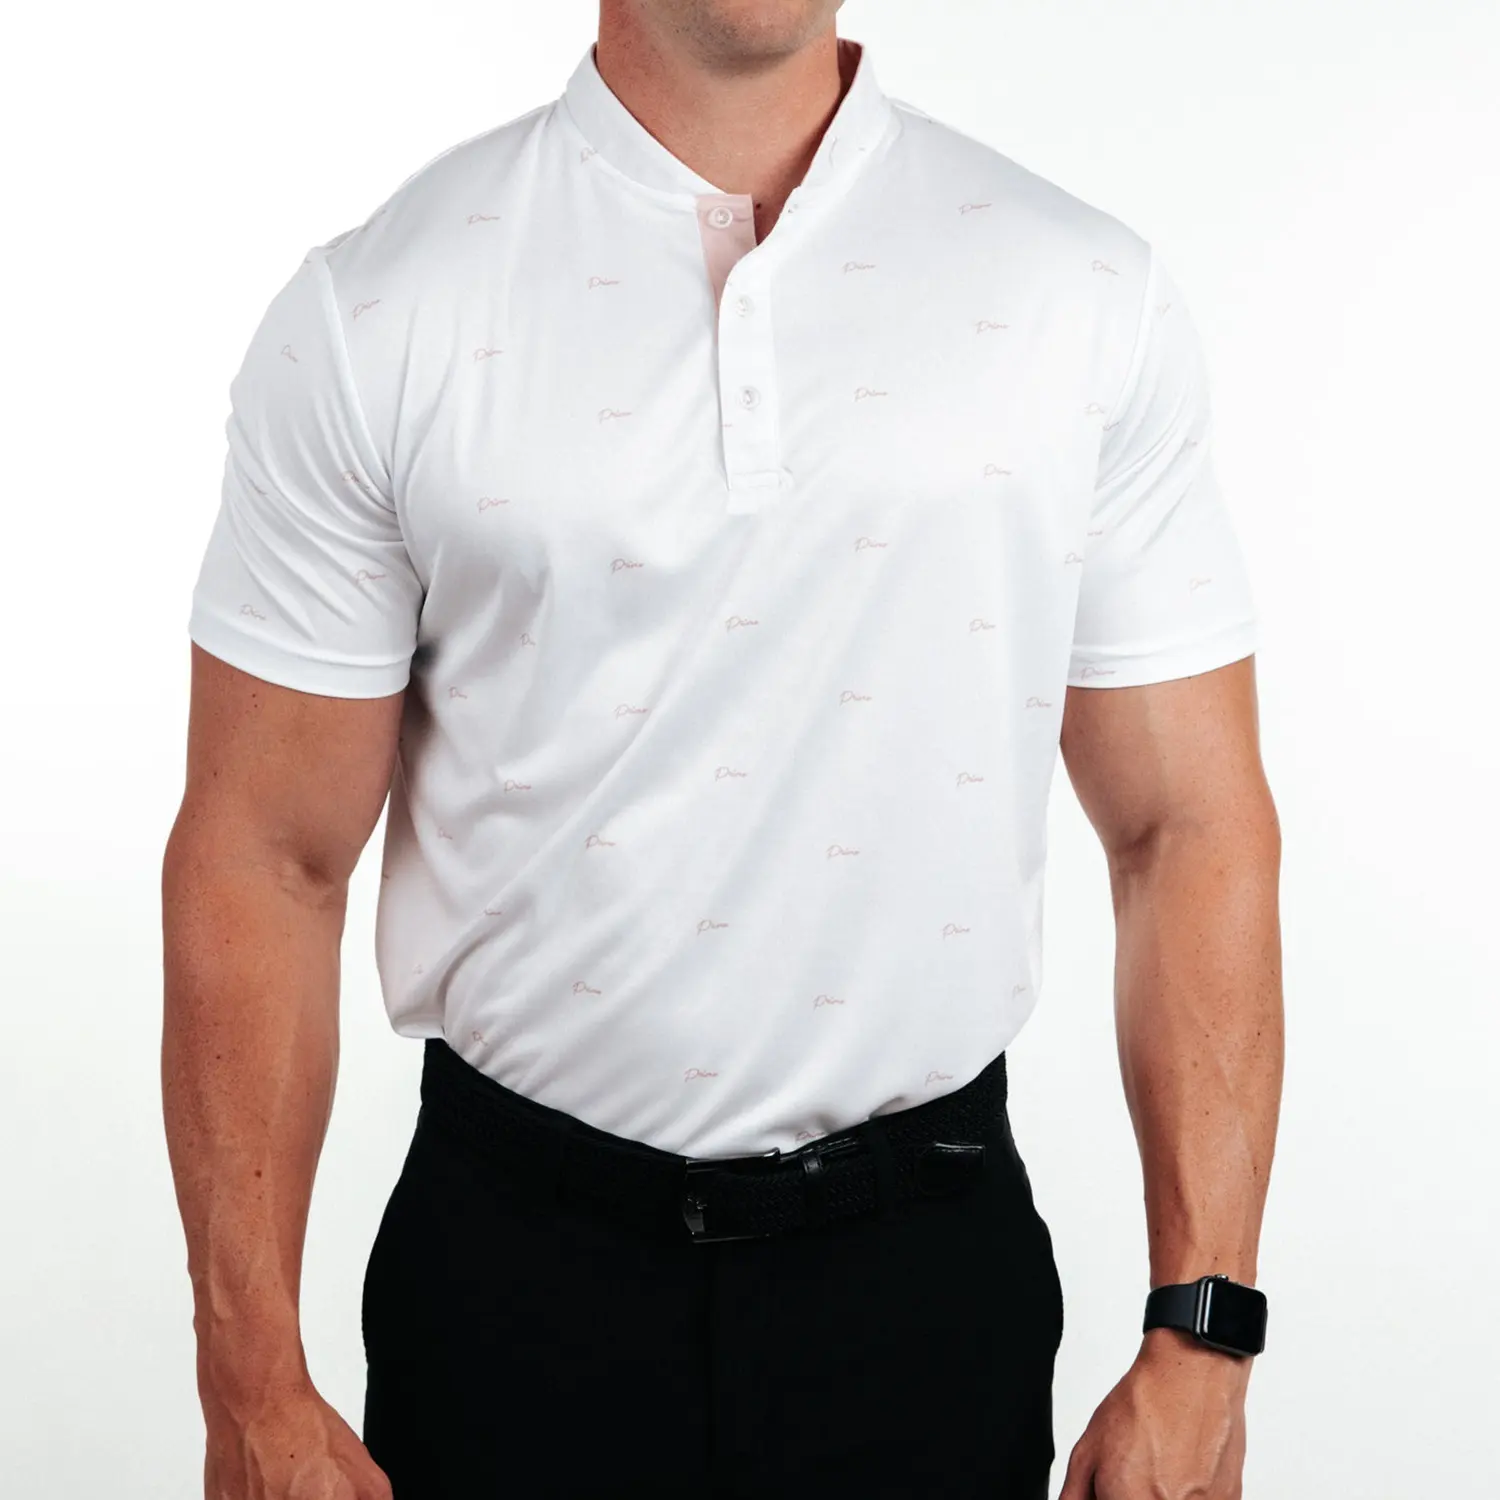 New Arrival Durable Golf Polo Shirt Polyester Breathable Digital Print Blade Collar Golf Shirt For Men